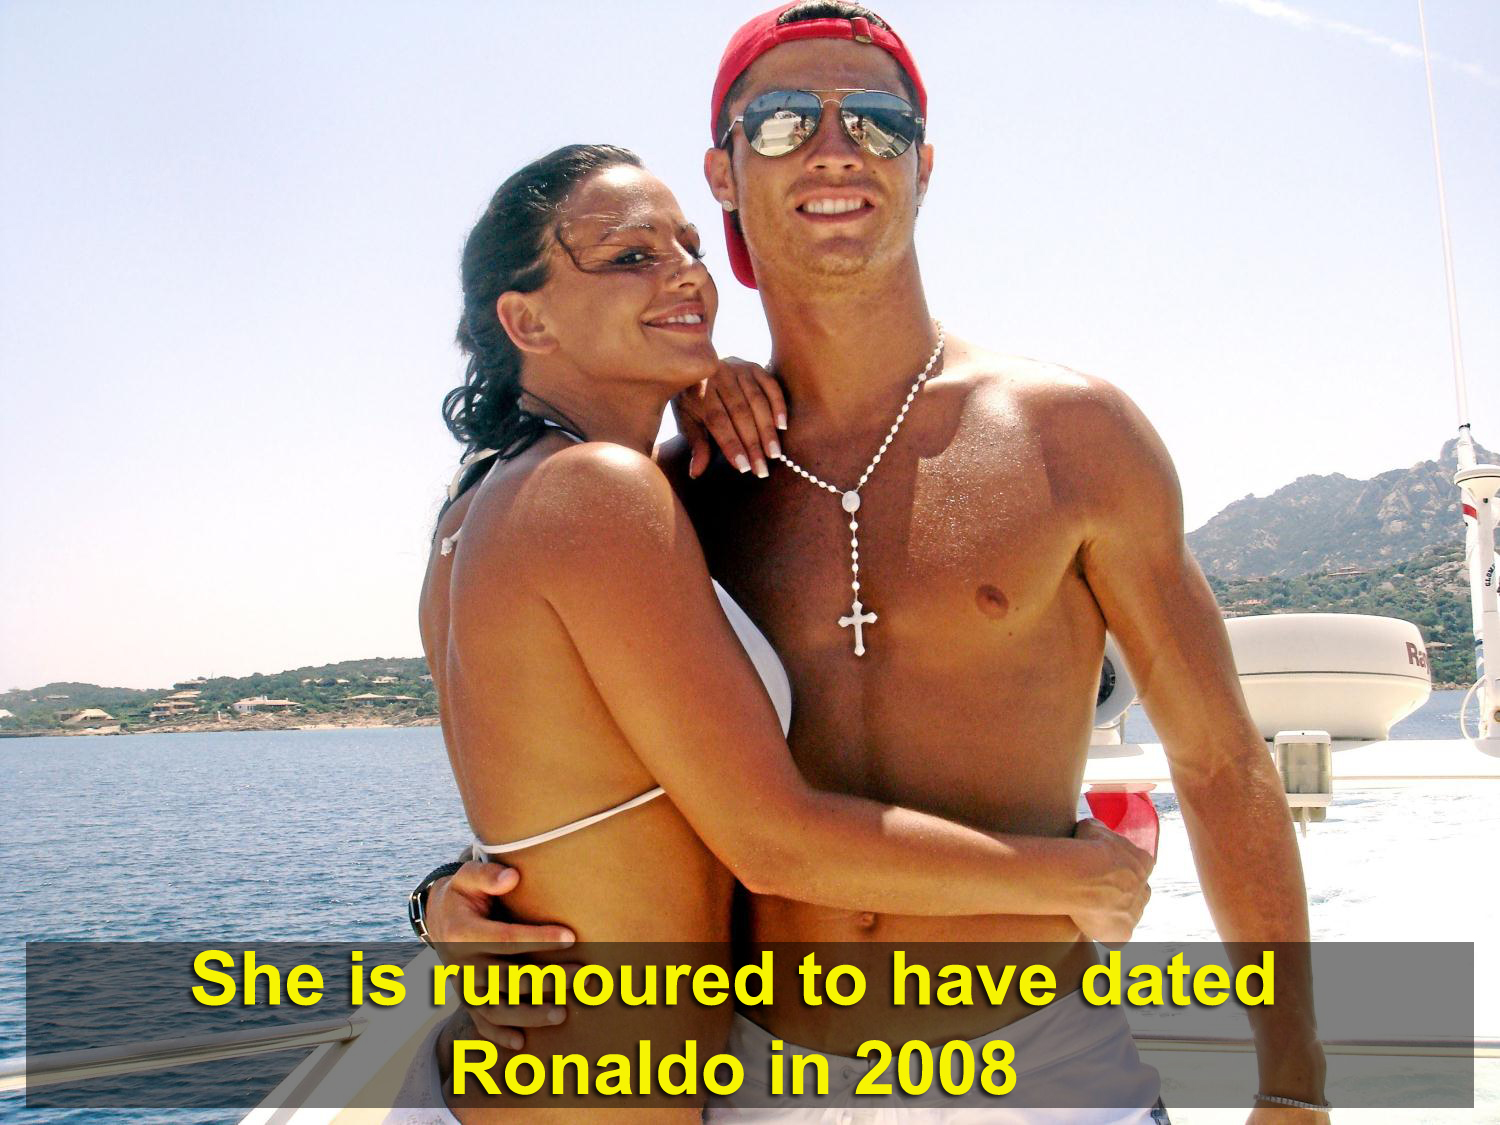 Cristiano Ronaldo Girlfriends